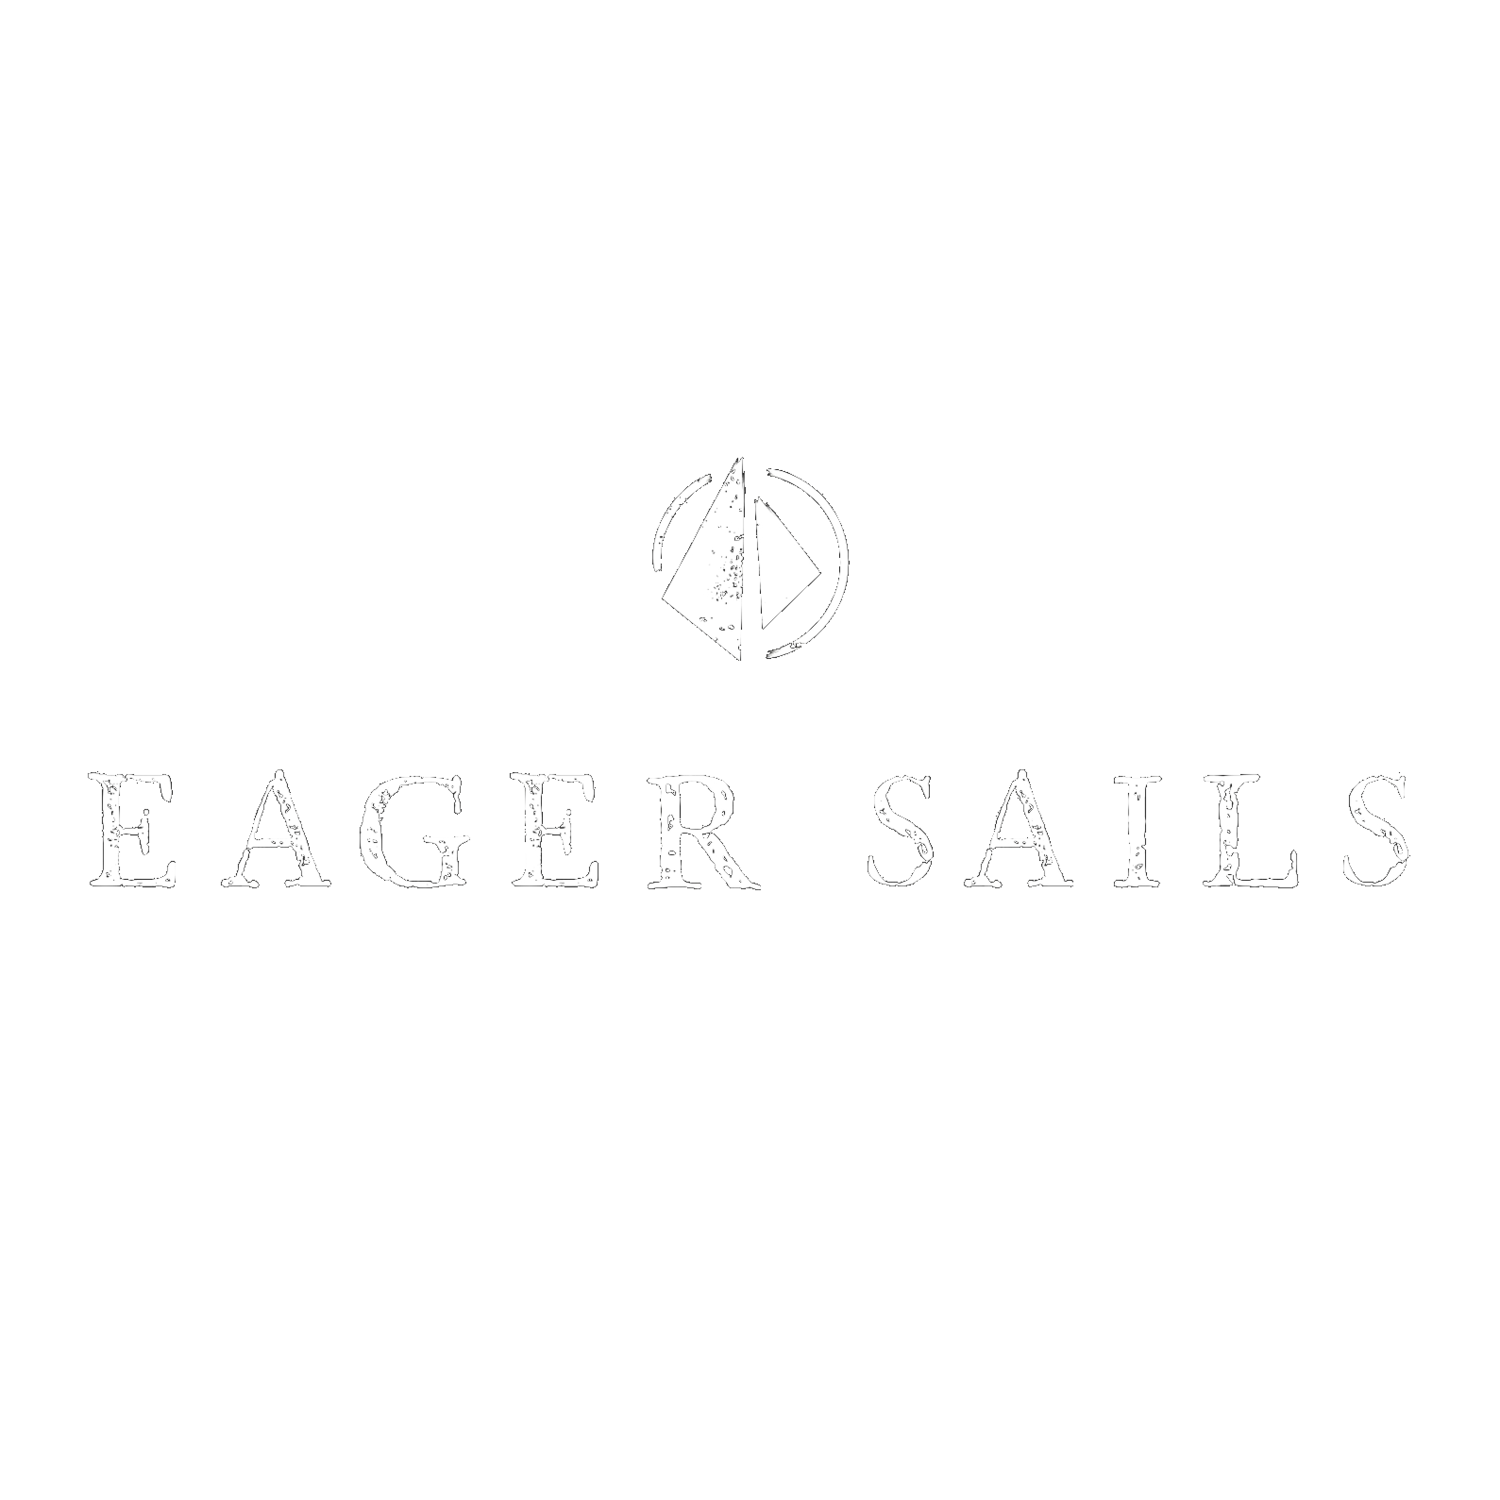 Eager Sails